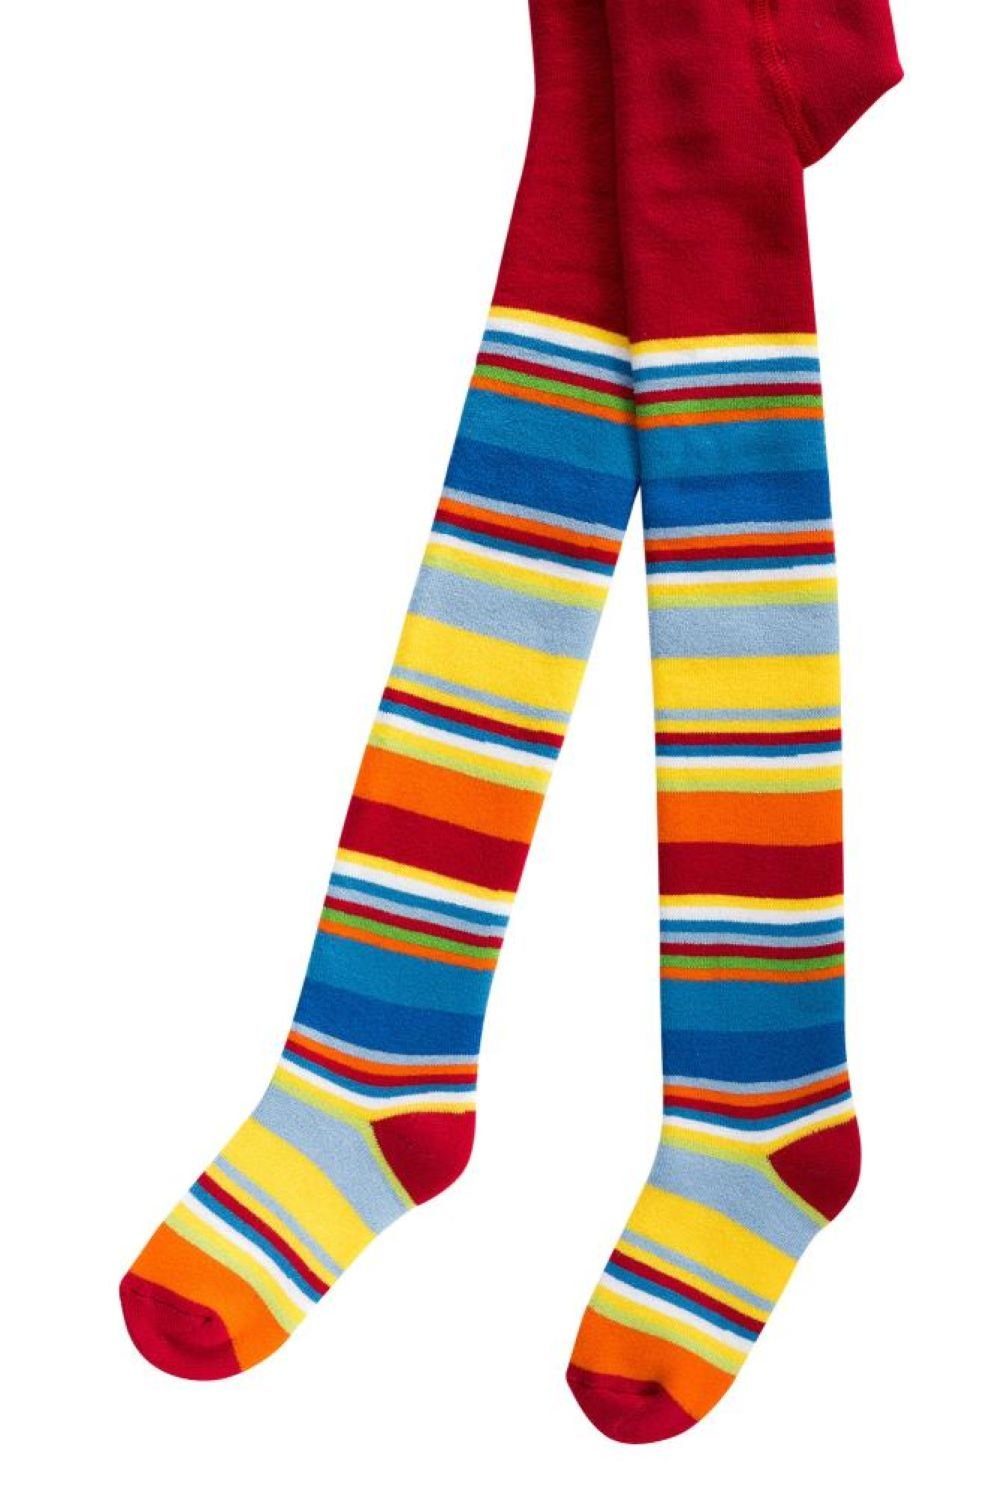 Socks 4 Fun Thermostrumpfhose Socks Stück blau 150 St. 4 Fun DEN 1 Stück) (1 5768 Kinder-Thermostrumpfhose 1